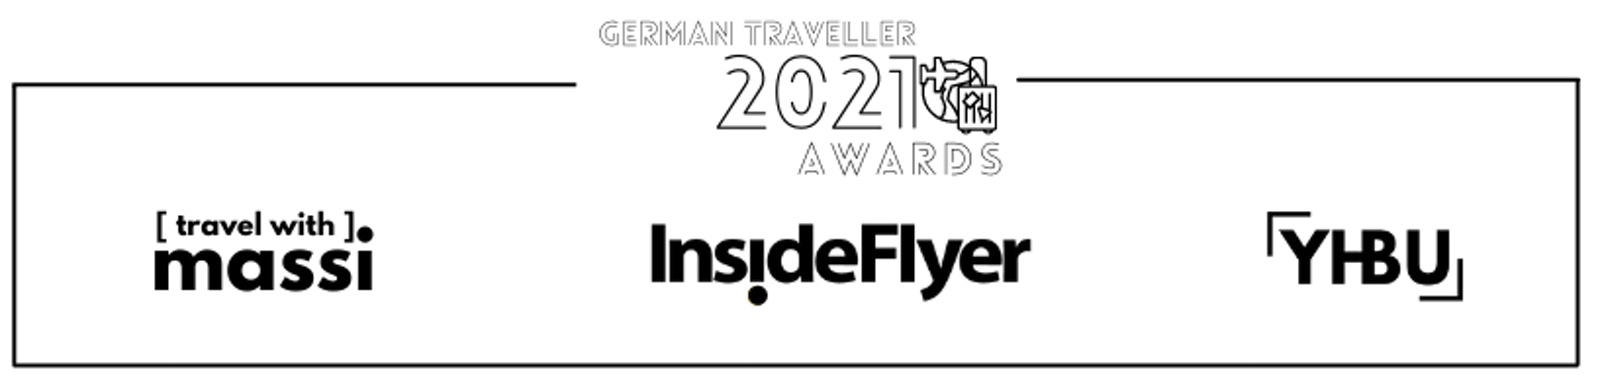 German Traveller Awards 2021